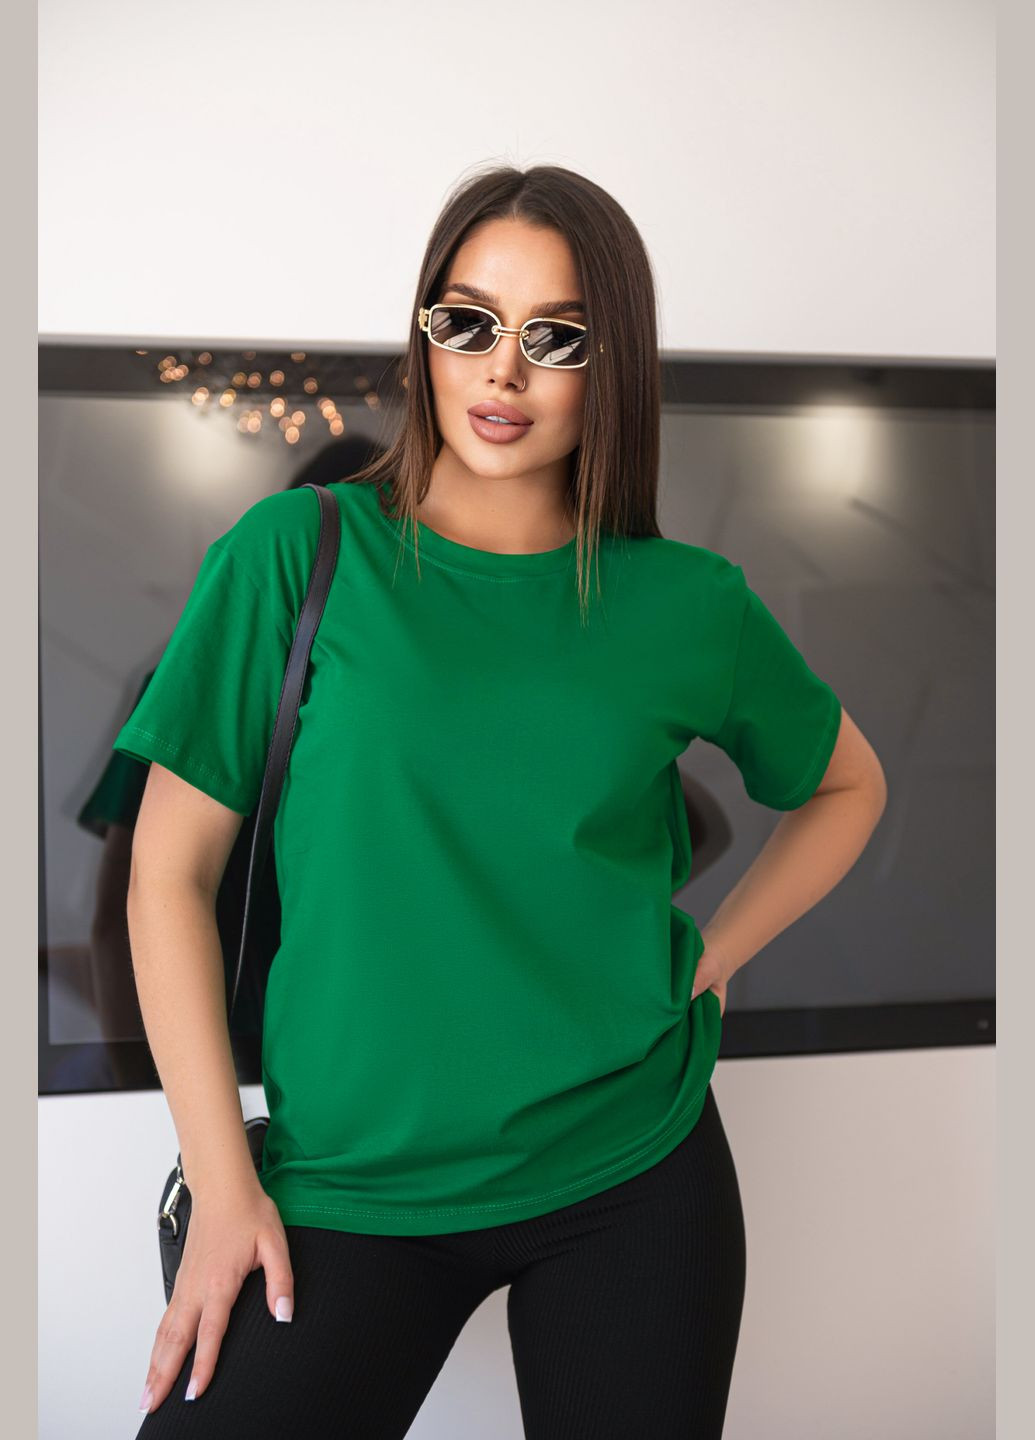 Зеленая летняя базовая женская футболка с коротким рукавом Fashion Girl Enkel